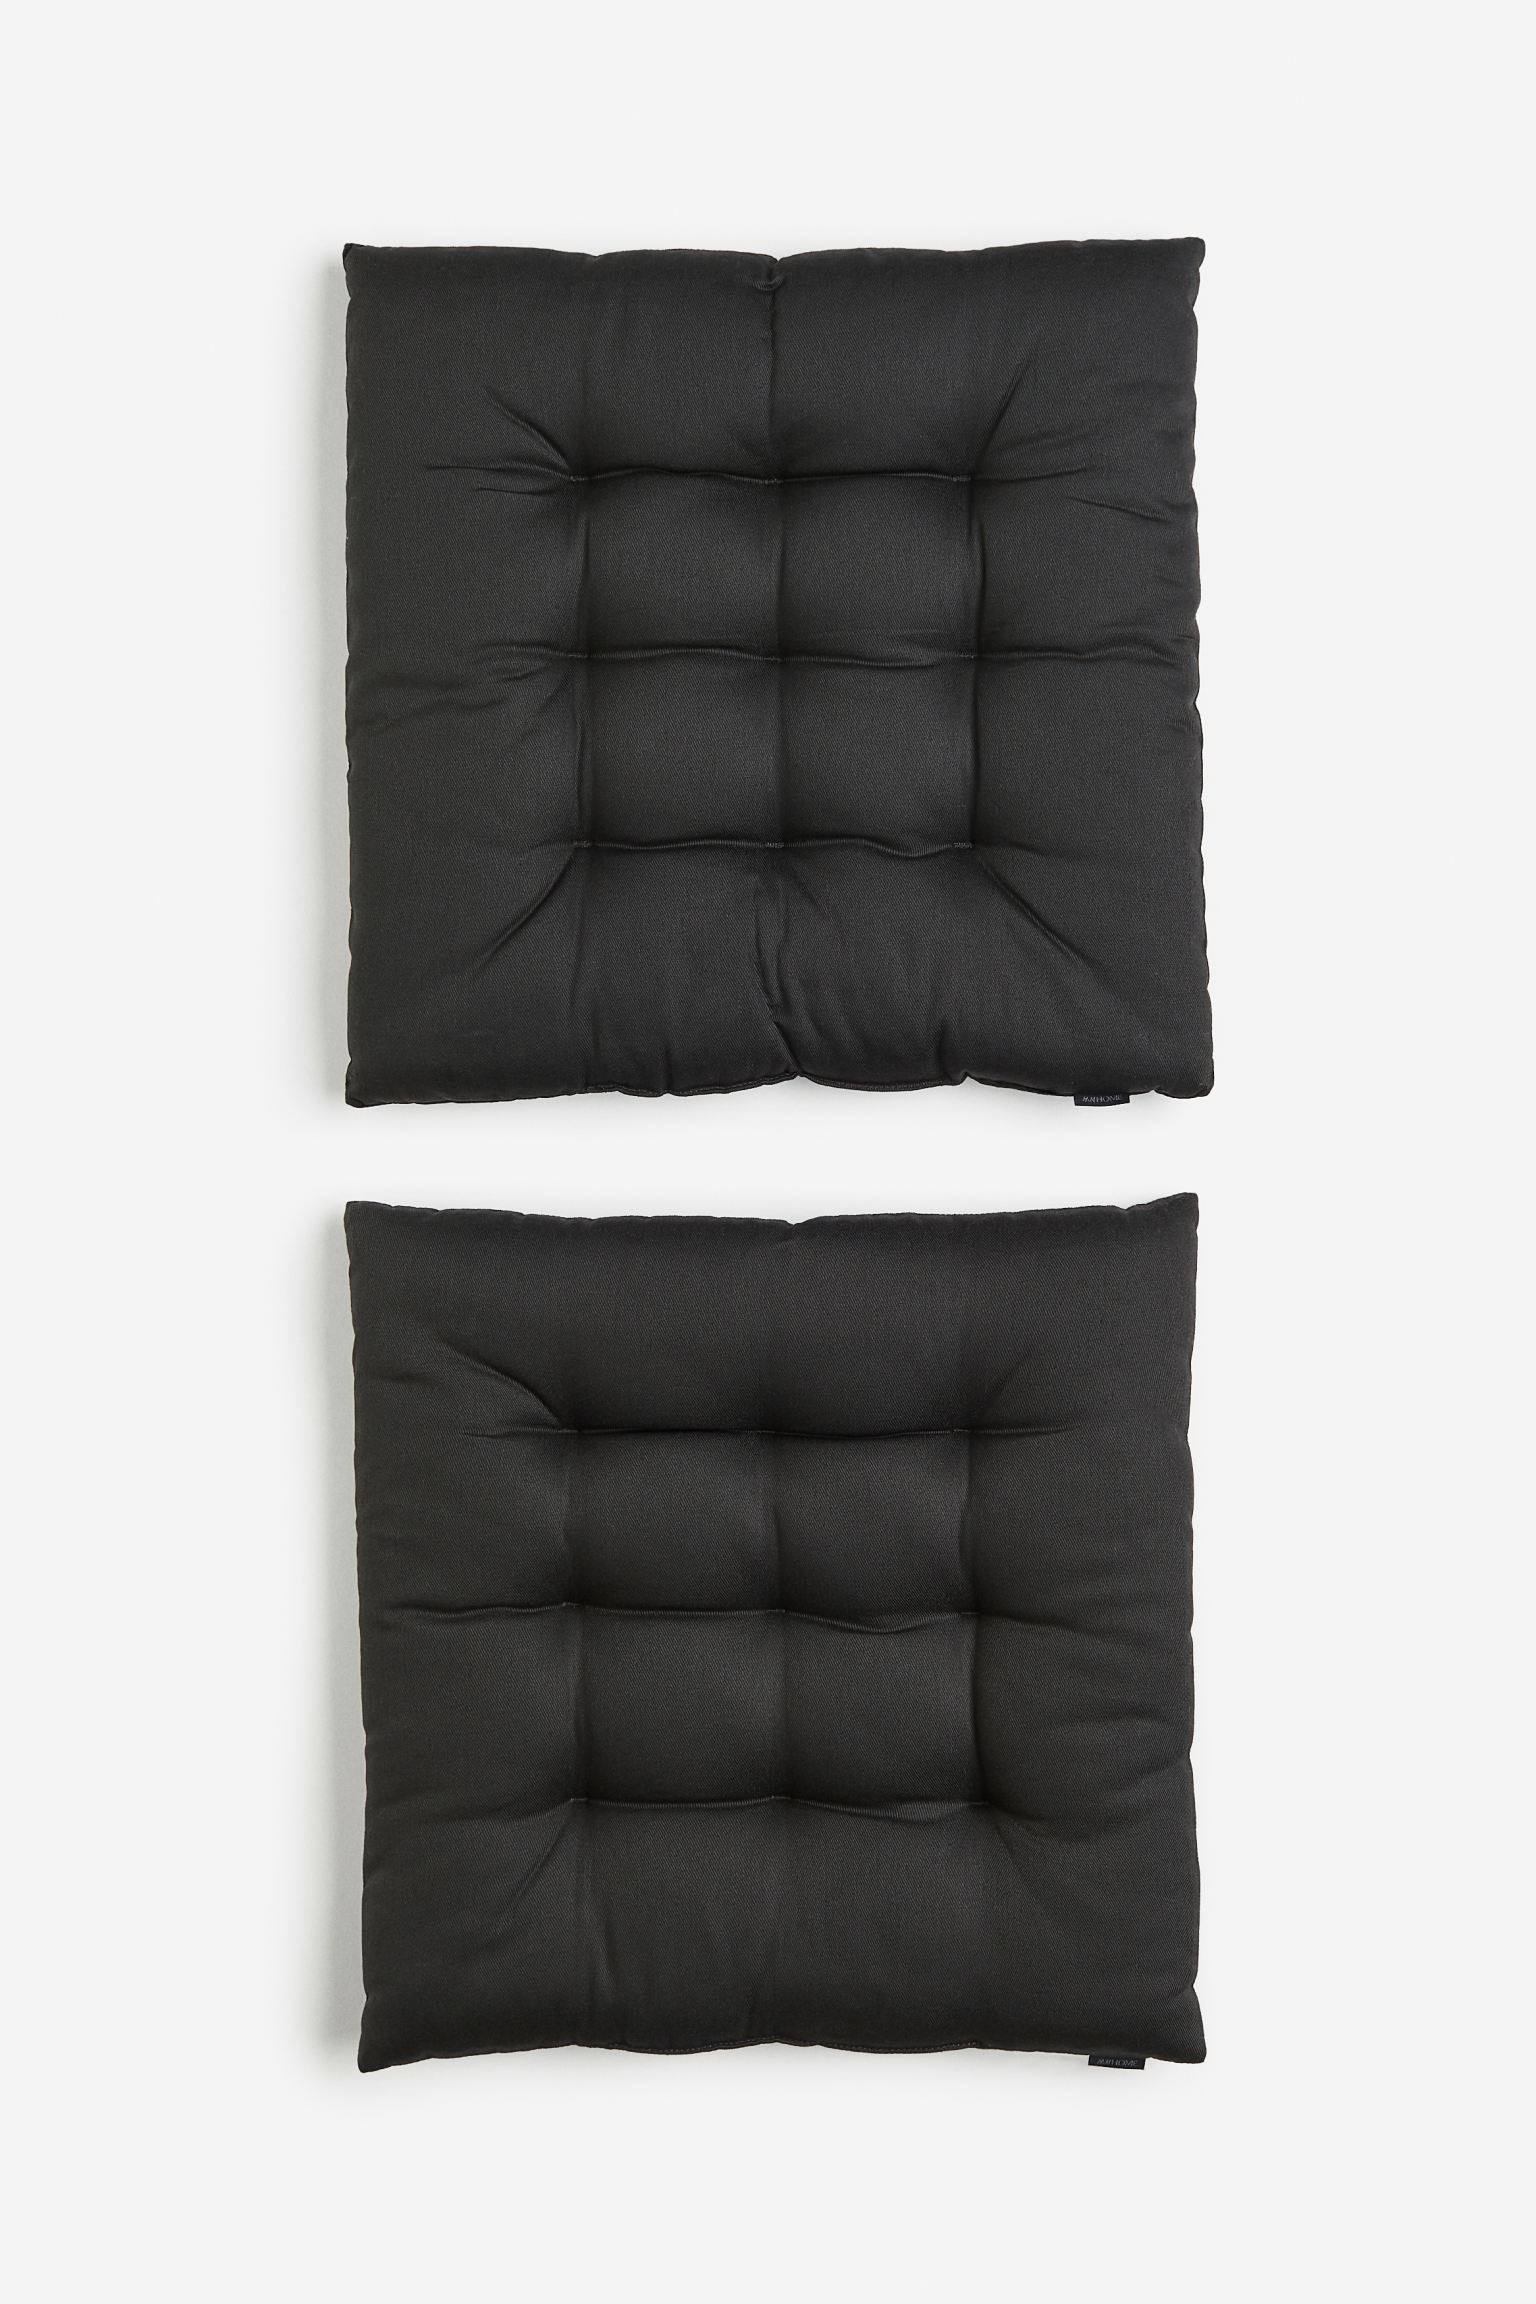 Хлопковая подушка на стул, 2 шт., Антрацитово-серый, 38x38